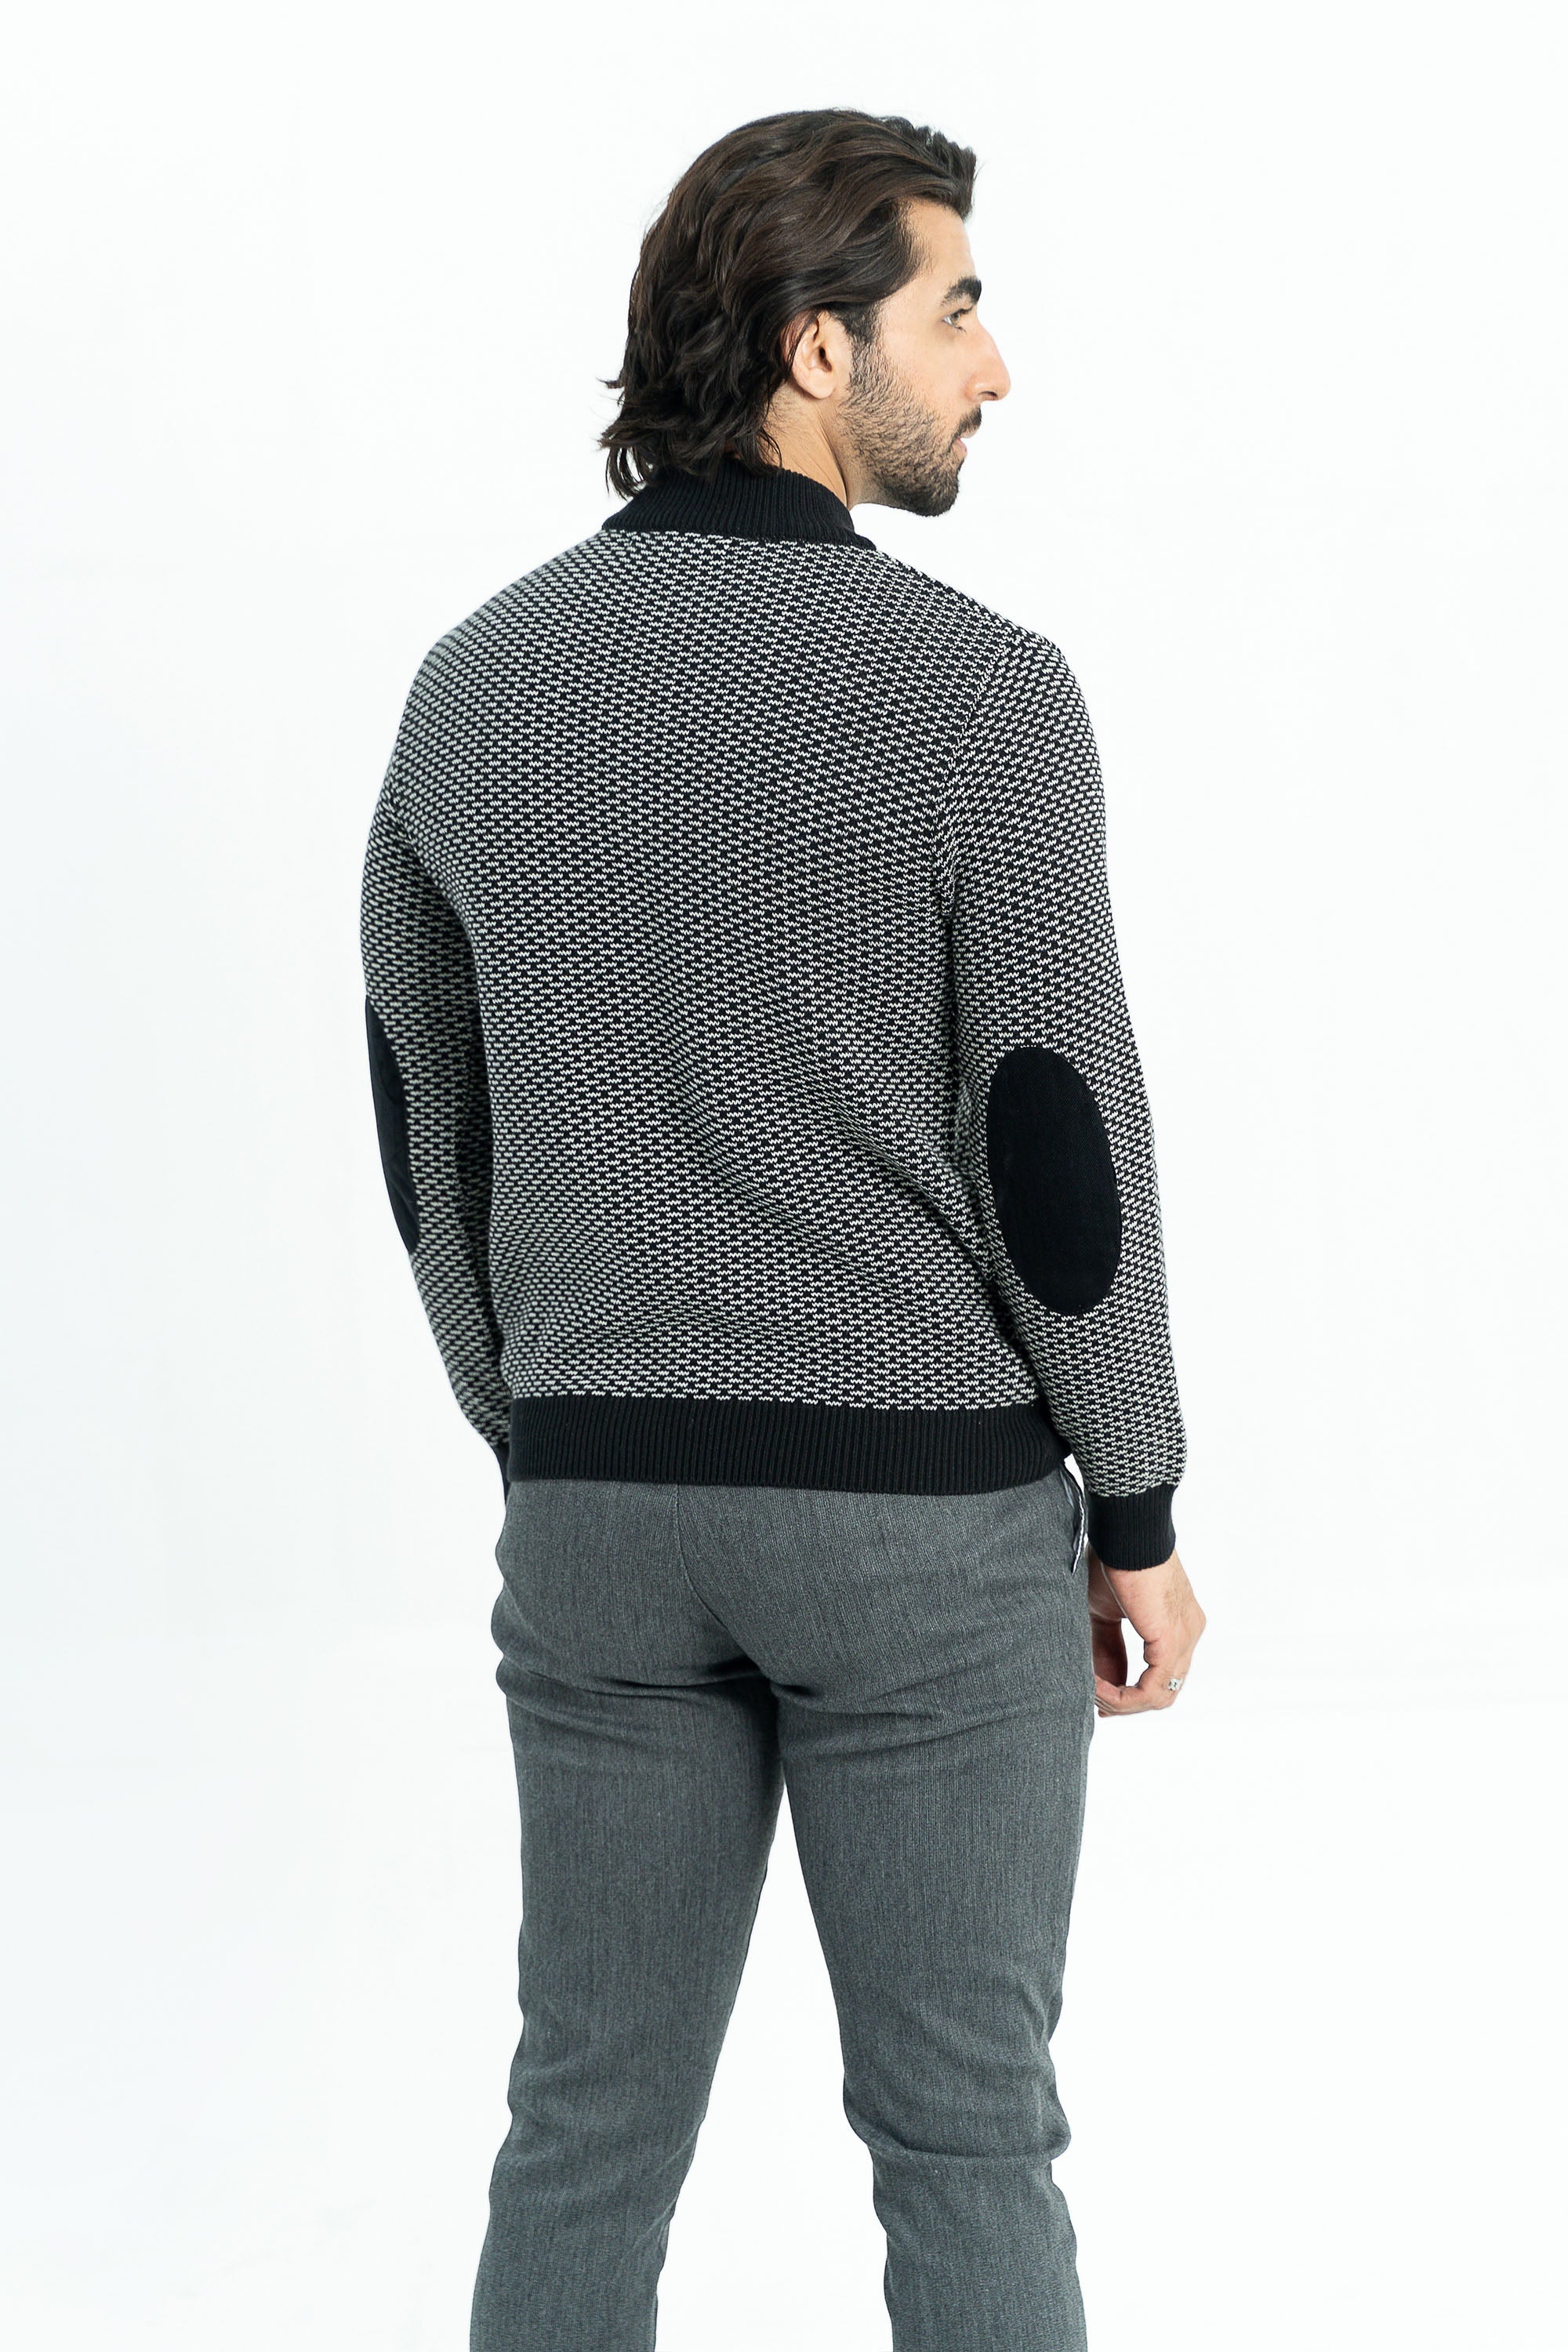 Greyish black sweater